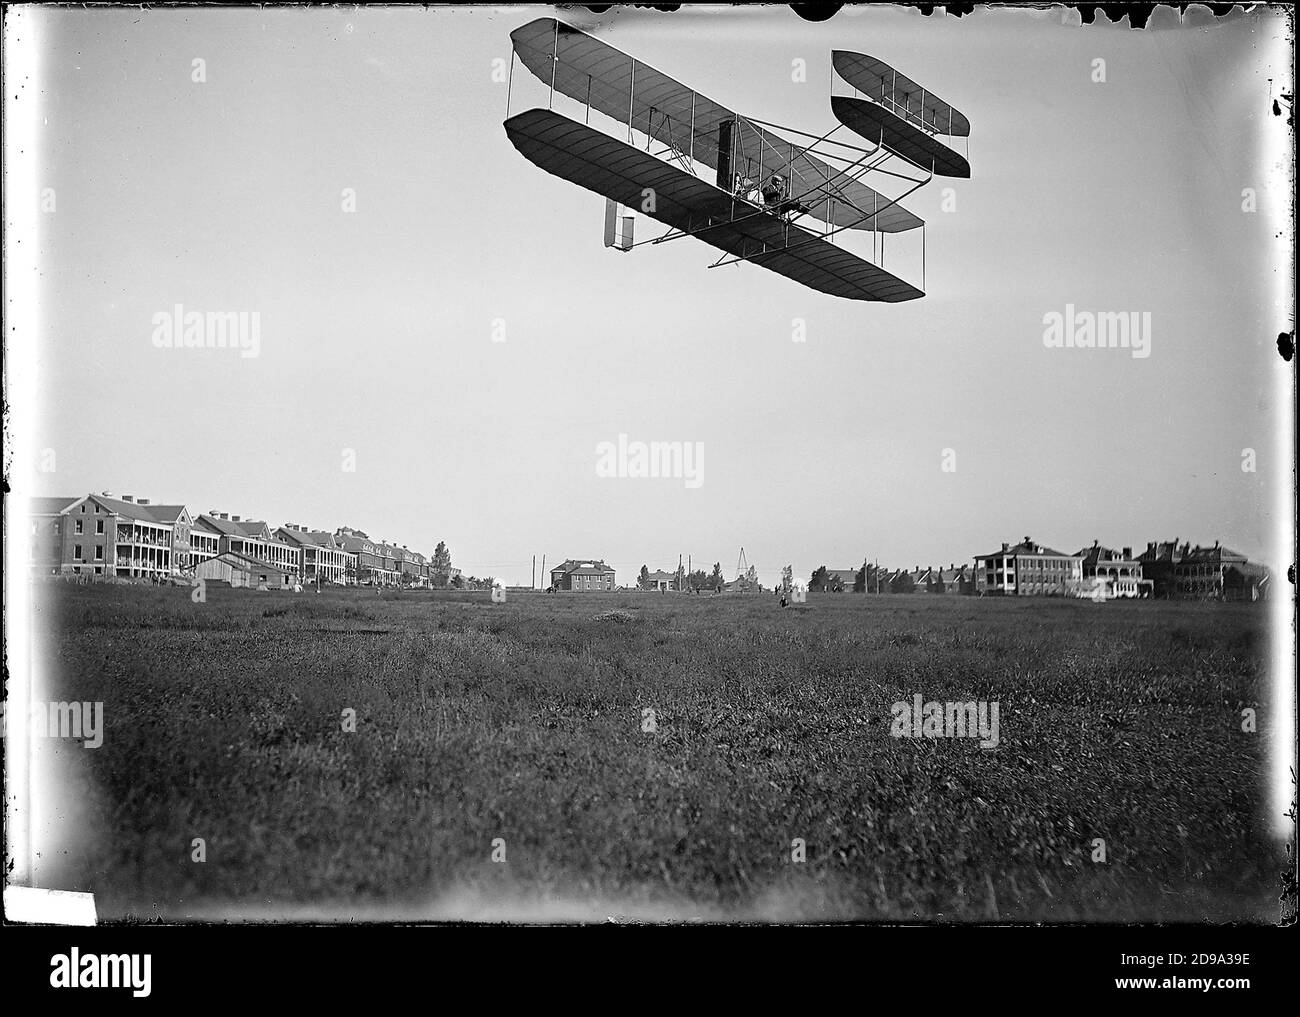 1908 september, USA :  Wright Aeroplane , Ft. Myer, VA. In this photo Orville Wright ( 1871 -1948 ) in plane . -    - VOLO - FLY - PIONIERI DELL' AVIAZIONE - AEROPLANO MONOPOSTO - PLANE - BIPLANE - BIPLANO - FOTO STORICHE - HISTORY - HISTORICAL - RECORD  - AVIATORE - AVIAZIONE - AVIATOR - AVIATION - FRATELLI WRIGHT - VOLO - FLY  ----  Archivio GBB Stock Photo